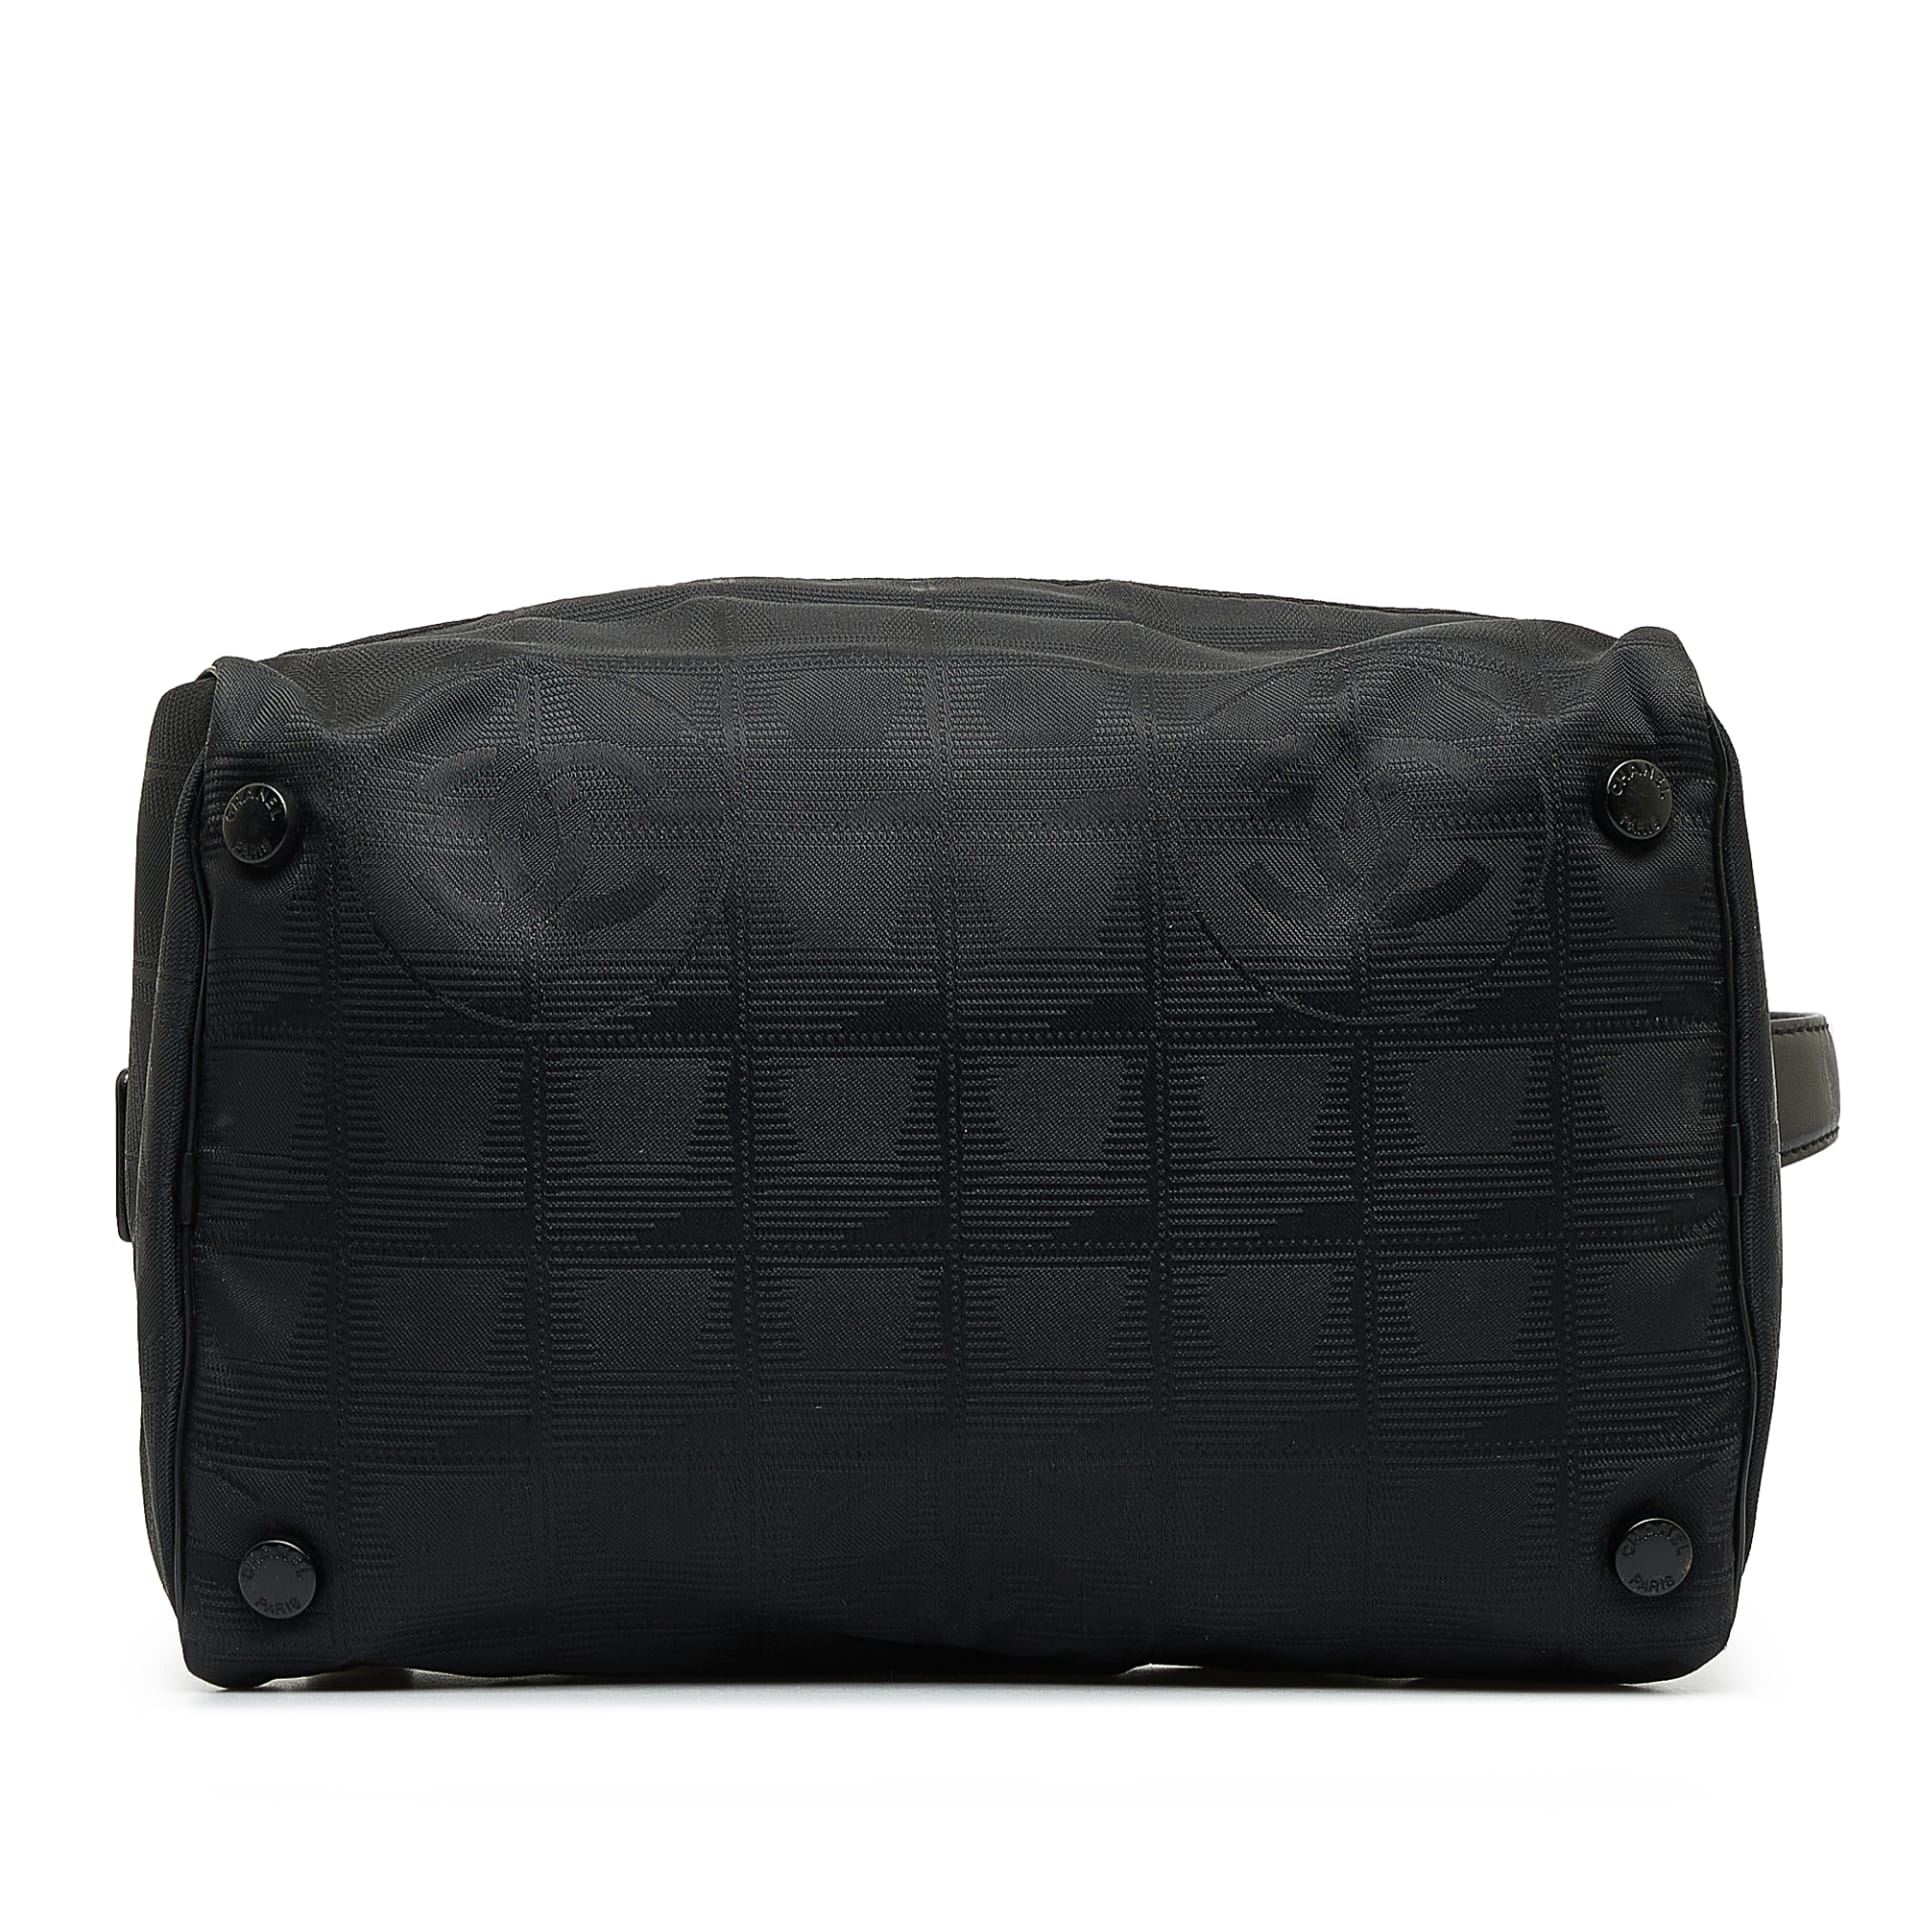 Chanel New Travel Line Vanity Bag